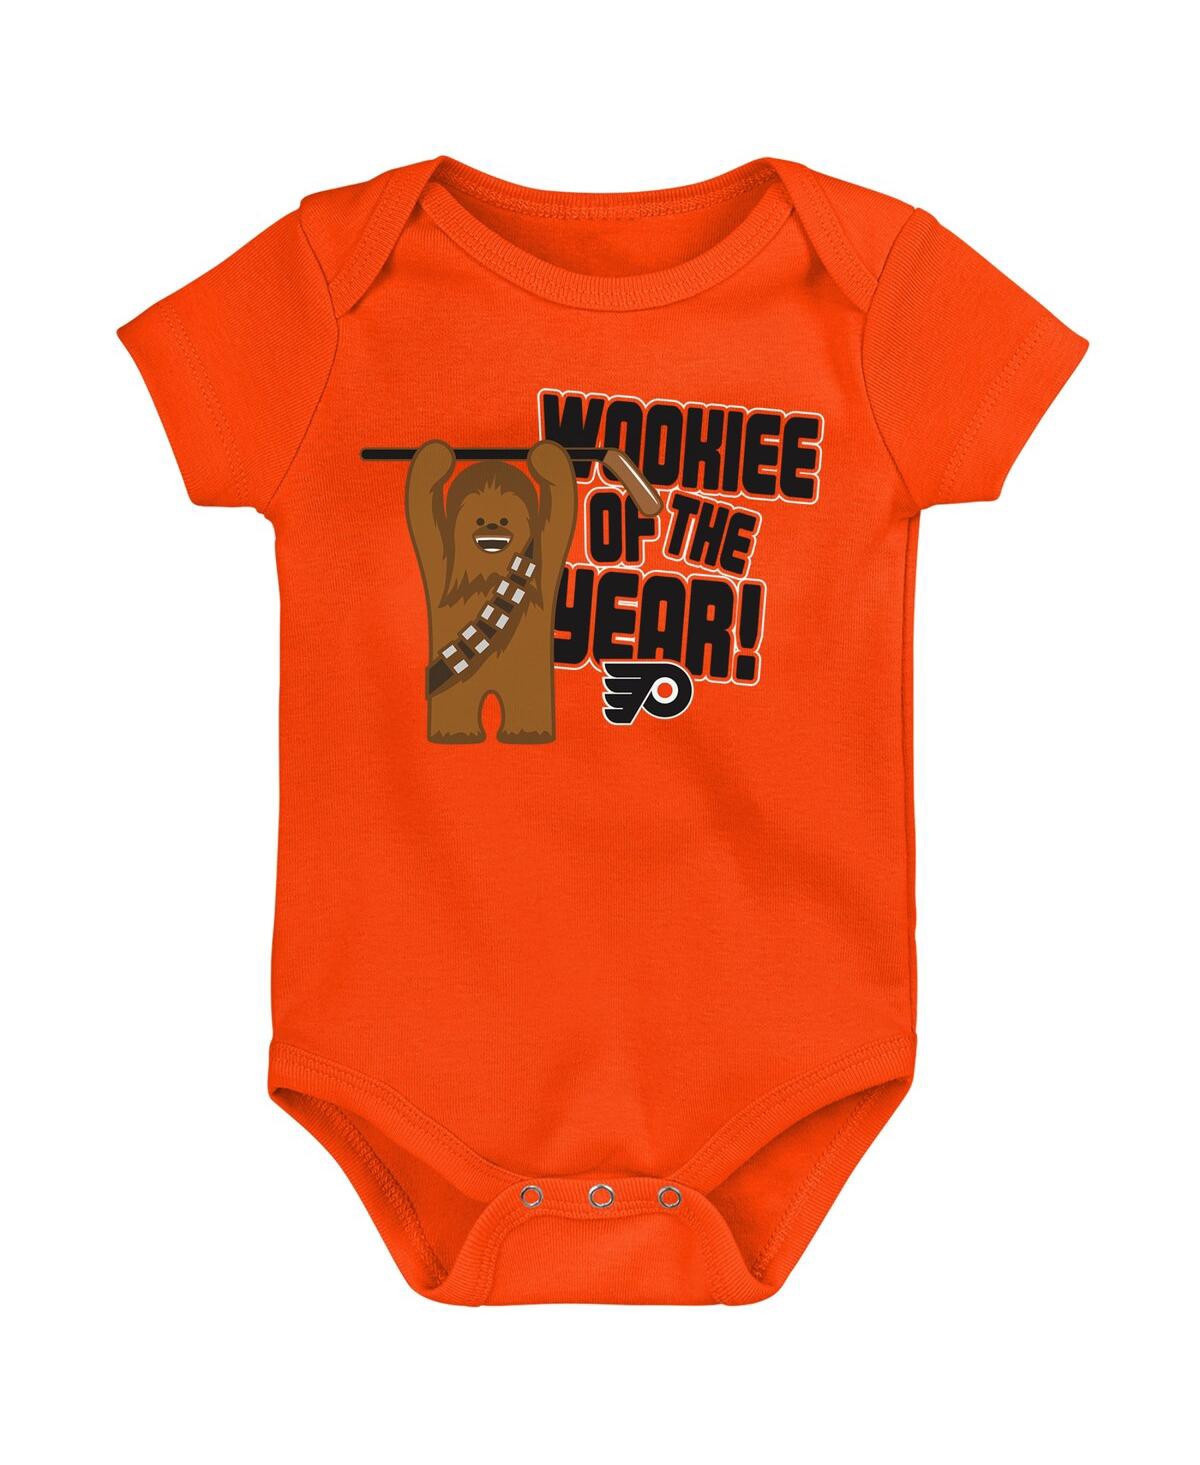 Outerstuff Babies' Infant Boys And Girls Orange Philadelphia Flyers Star Wars Wookie Of The Year Bodysuit